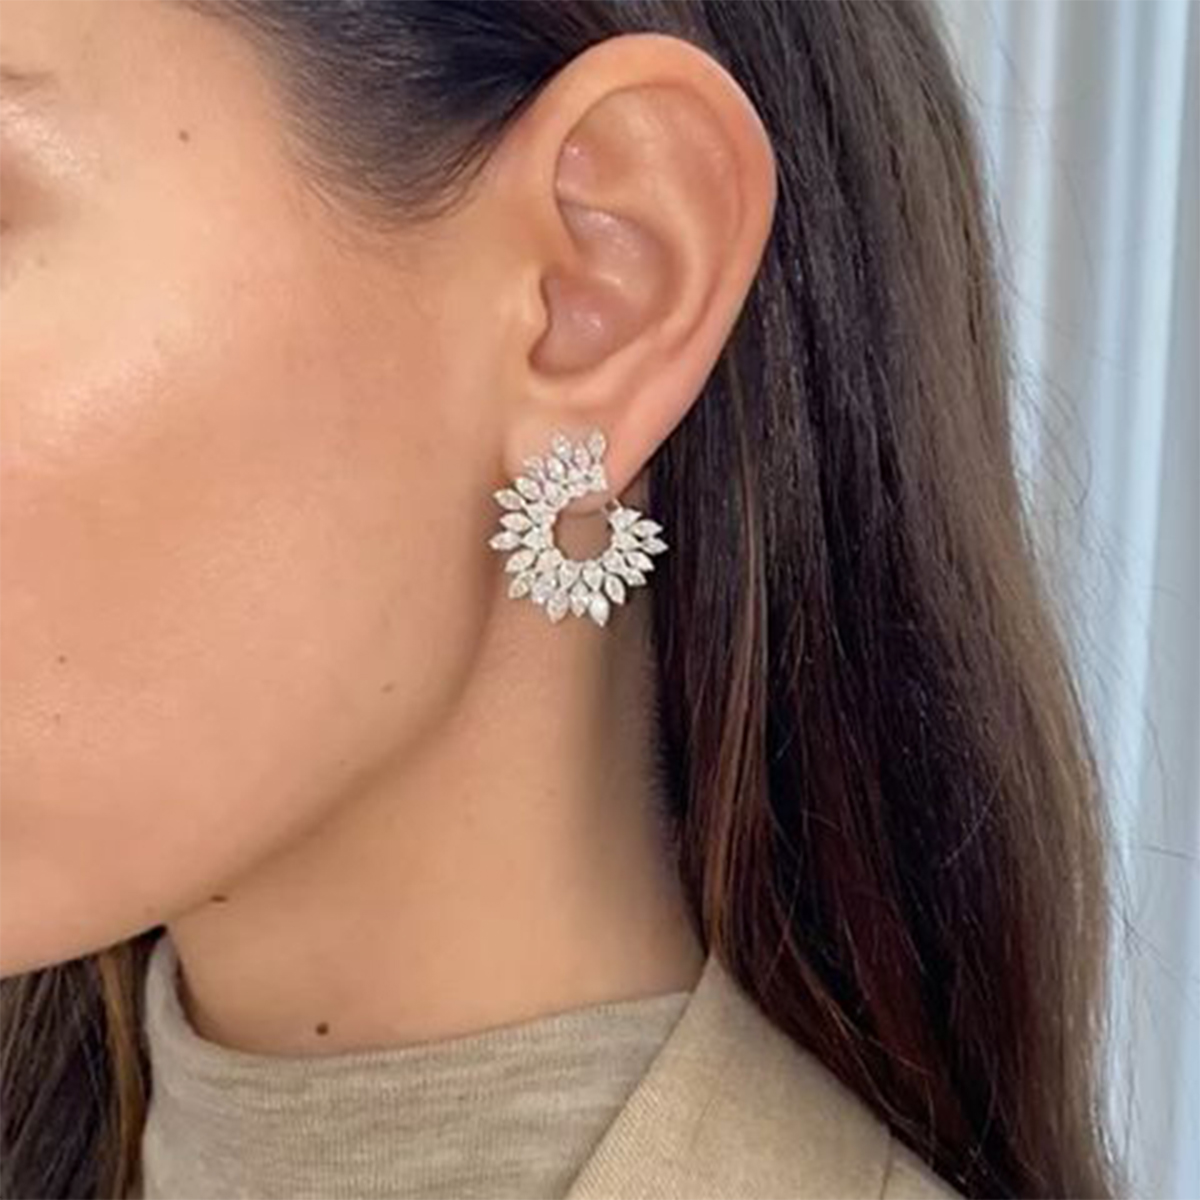 How to clean diamond earrings